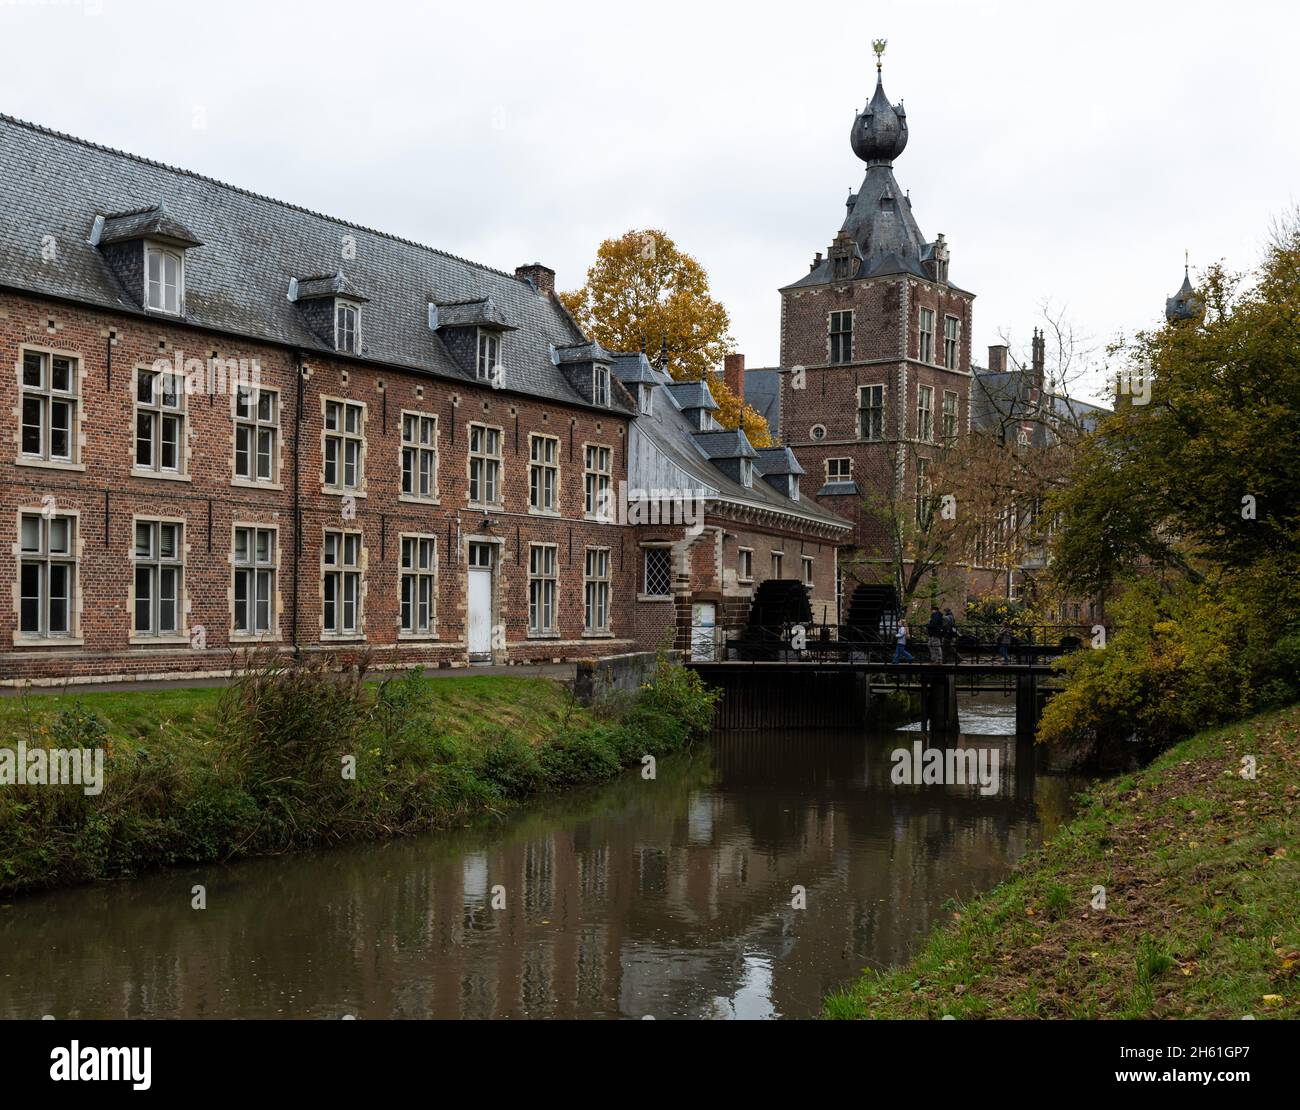 Egenhoven, Leuven, Flemish Brabant Region - Belgium 10 31 2021: View over the Arenberg castle and site Stock Photo